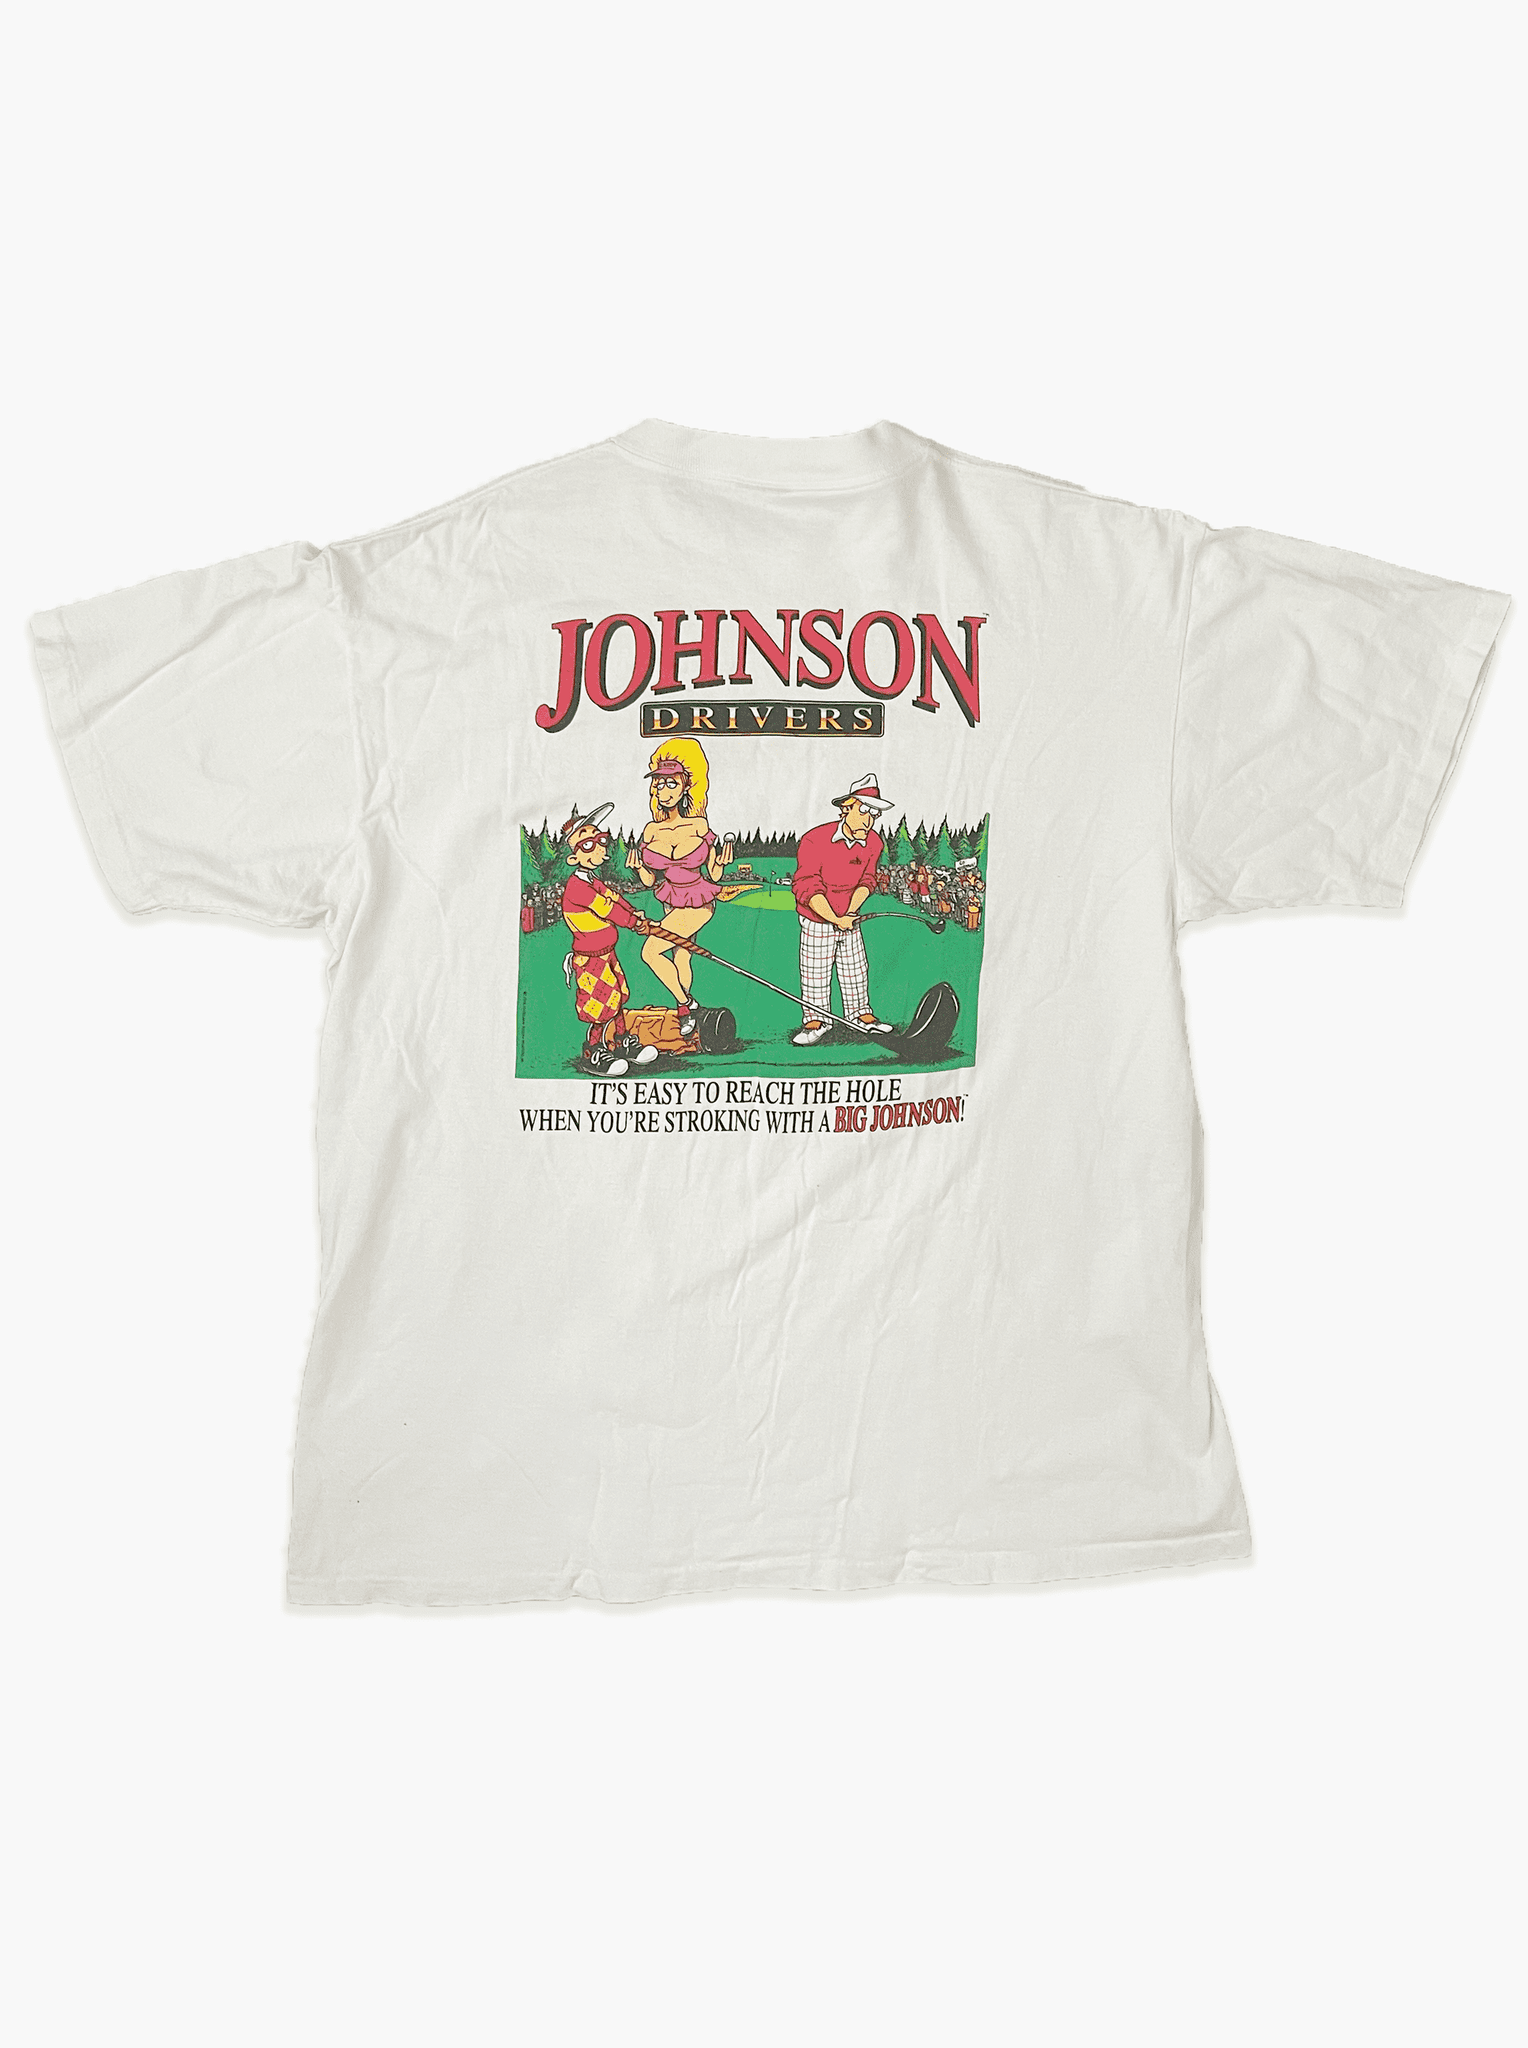 Big Johnson Drivers — XL